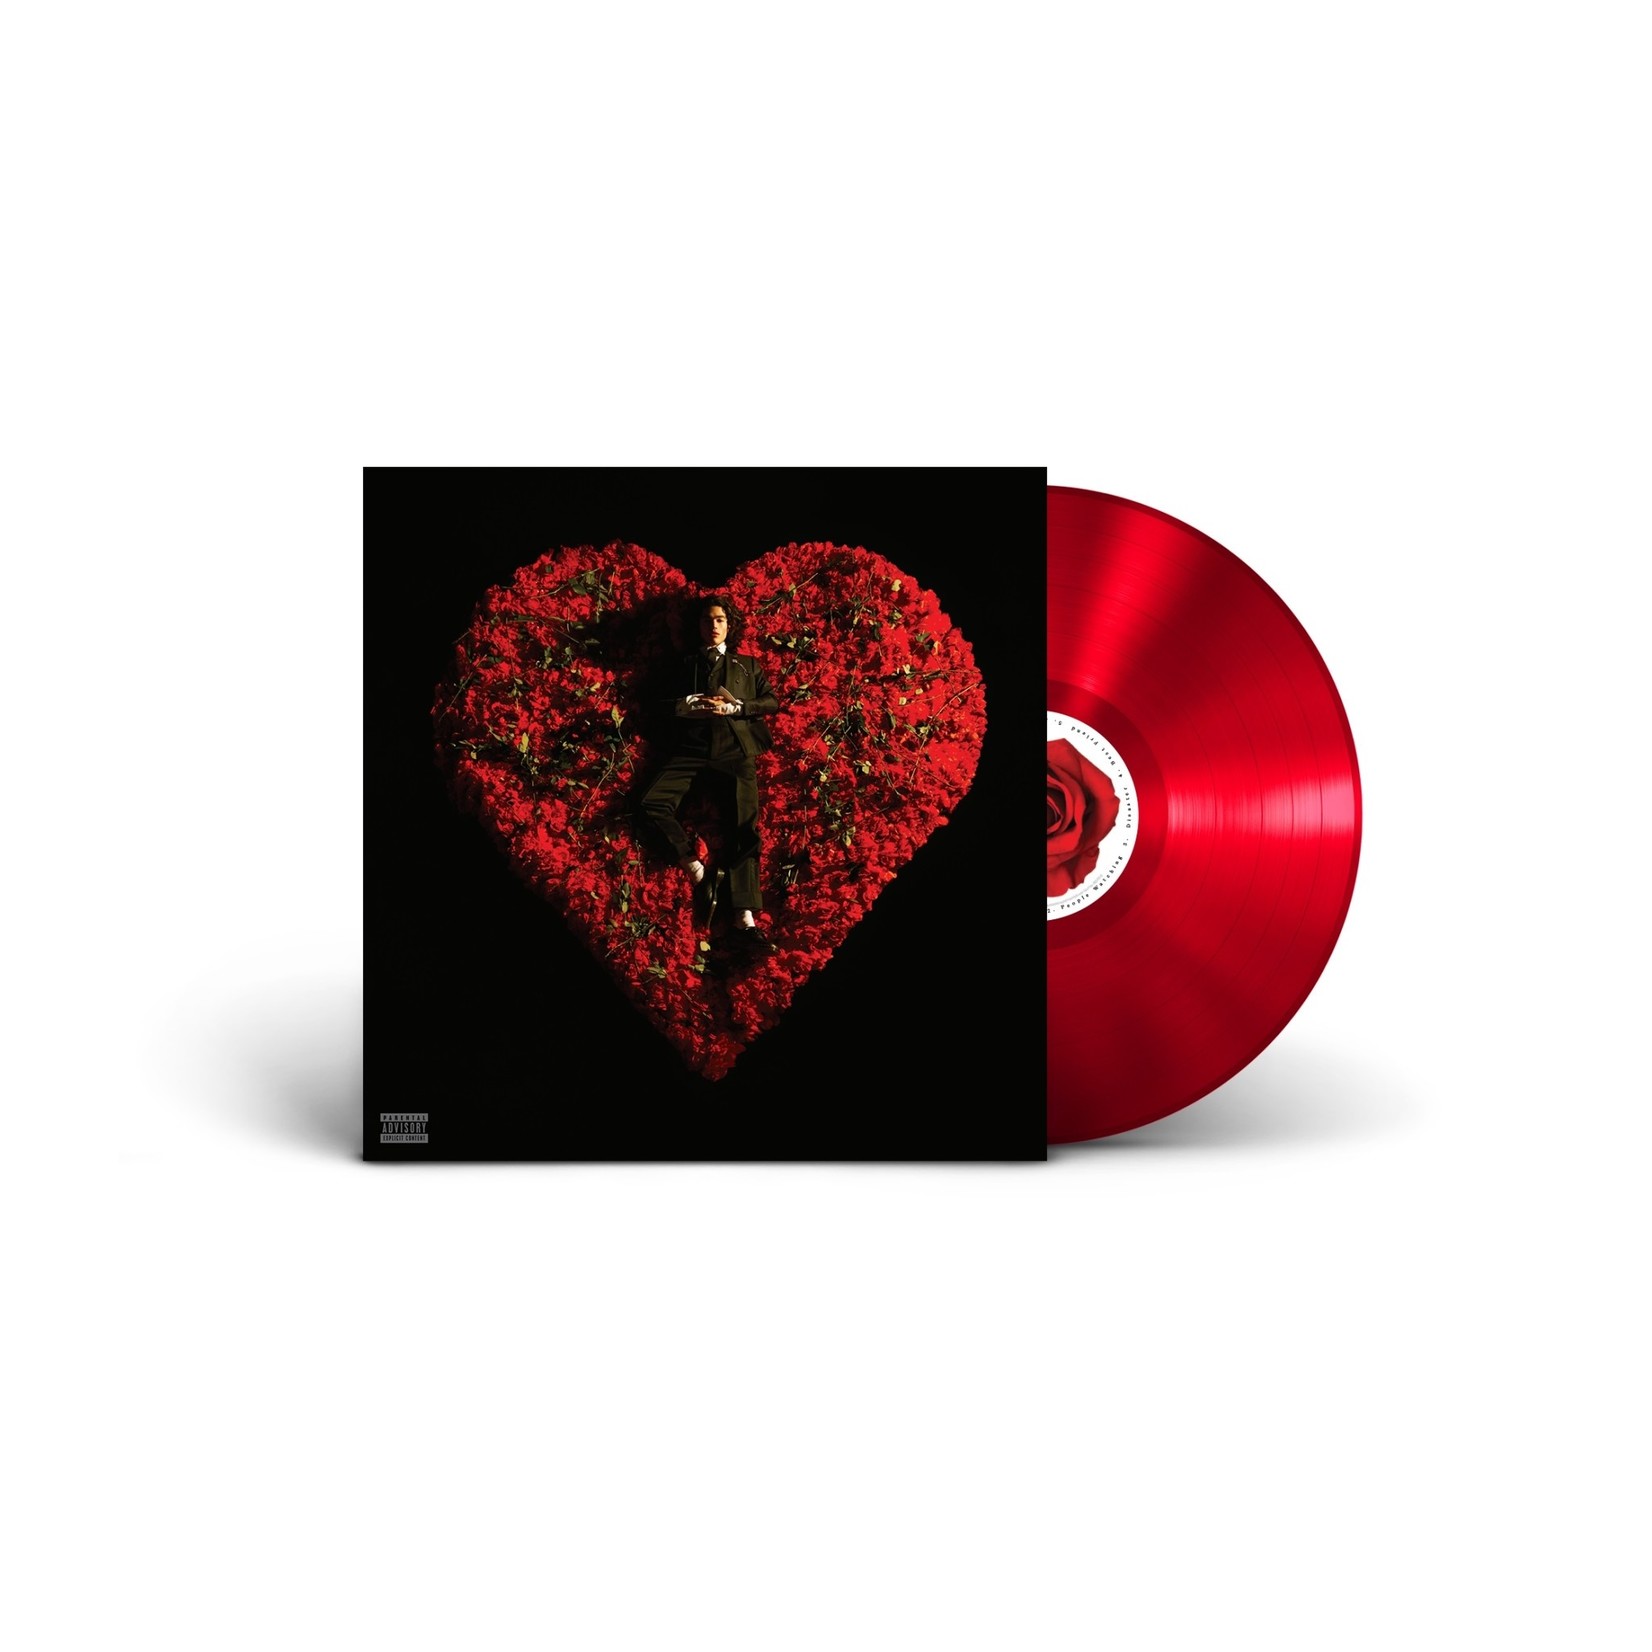 Republic Conan Gray - Superache (LP) [Ruby Red]